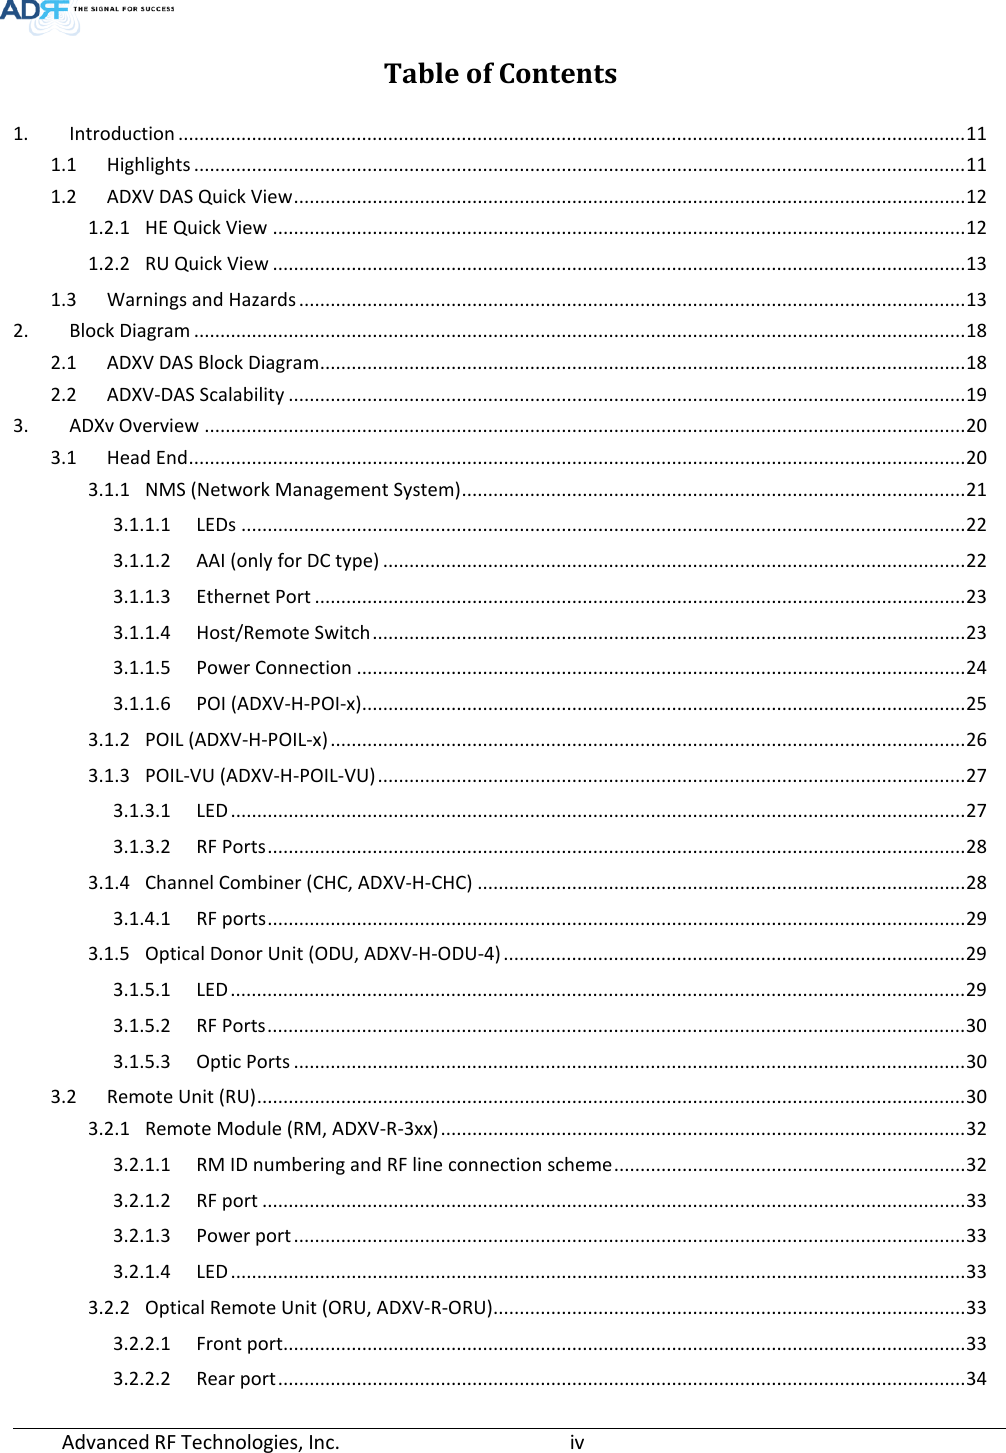 Page 4 of ADRF KOREA ADXV-R-78P-NA DAS (Distributed Antenna System) User Manual ADXV DAS